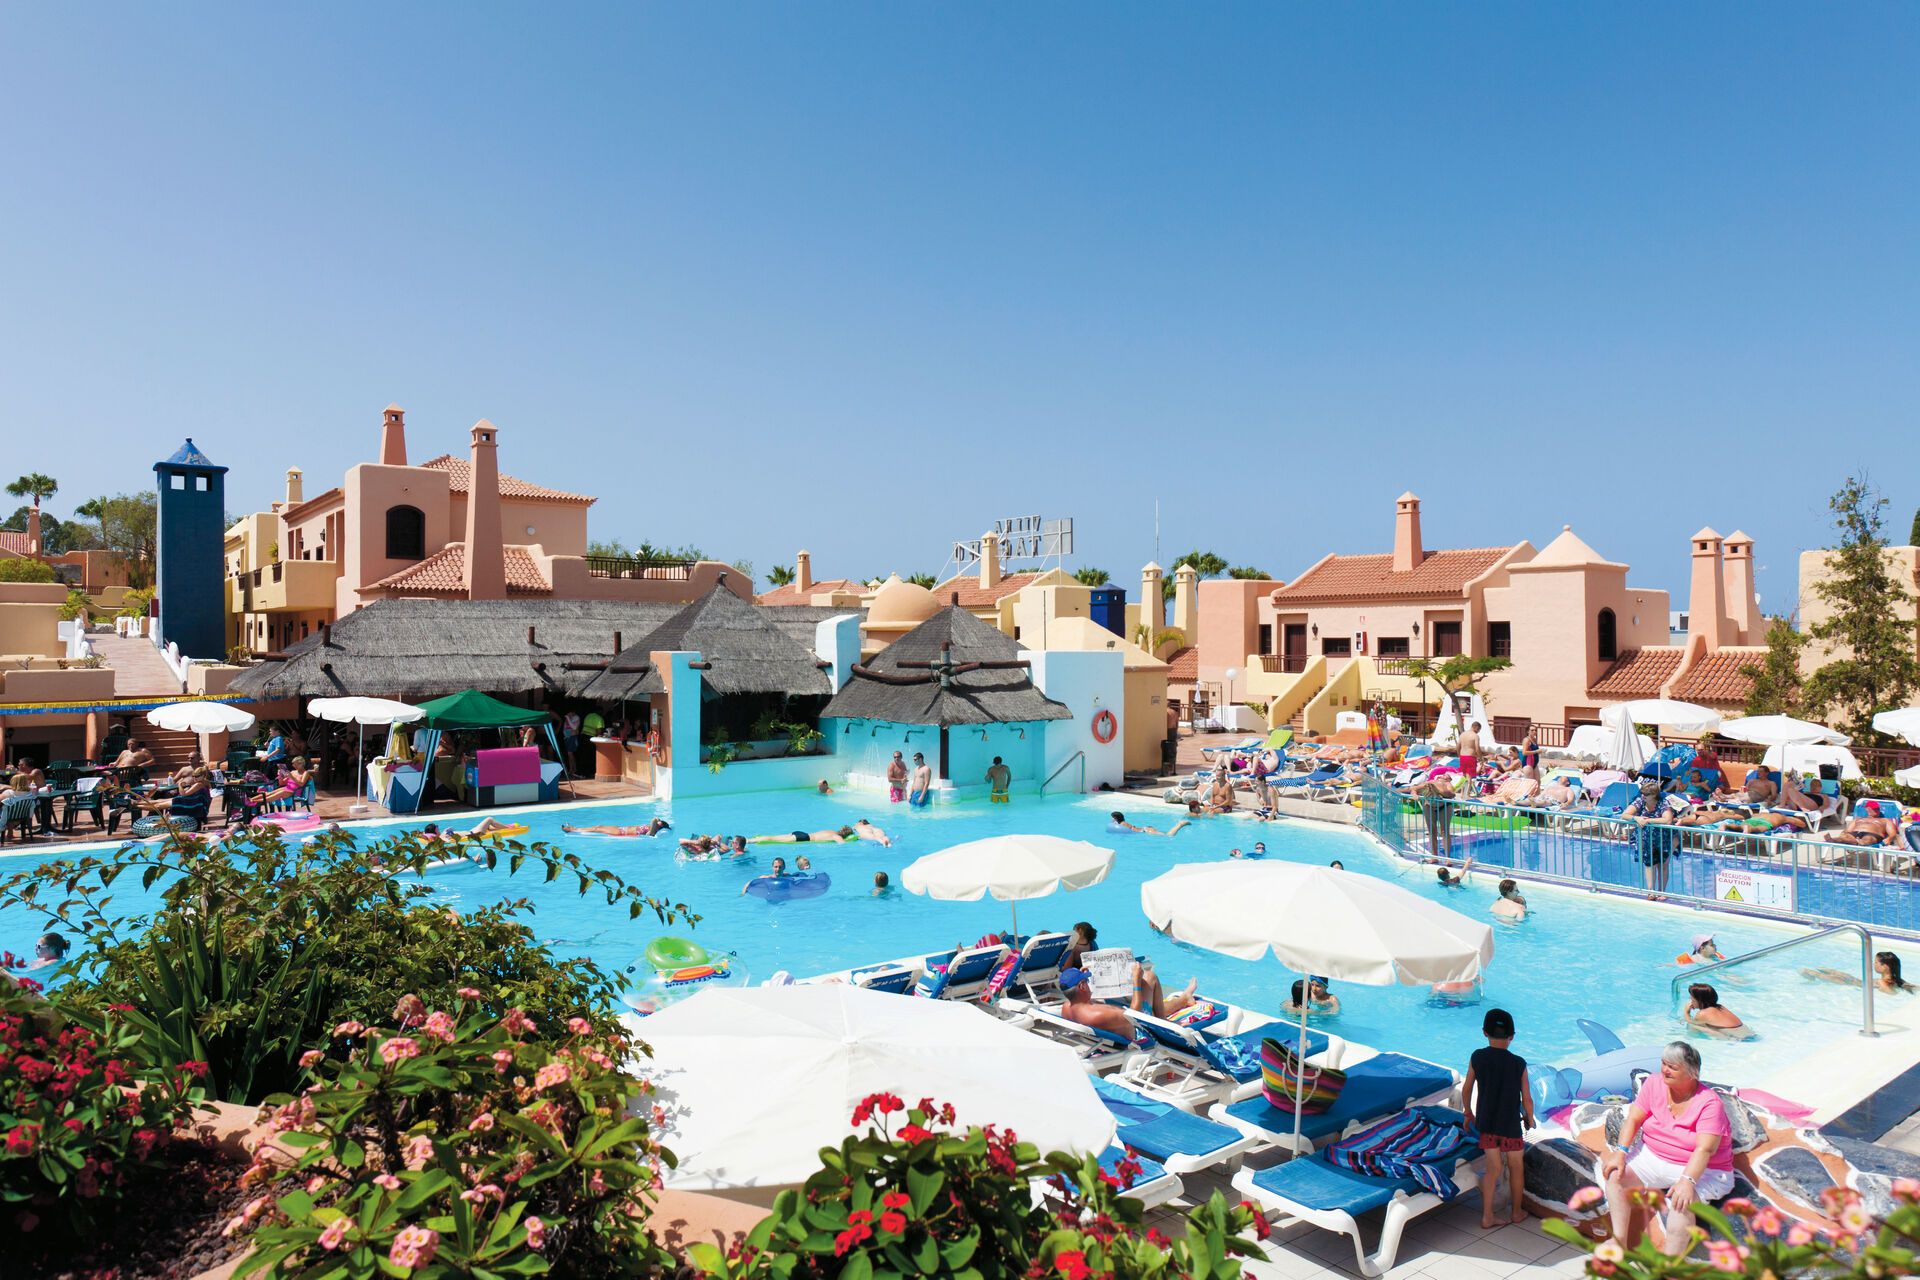 Canaries - Tenerife - Espagne - Hotel Tagoro Family & Fun Costa Adeje 4*